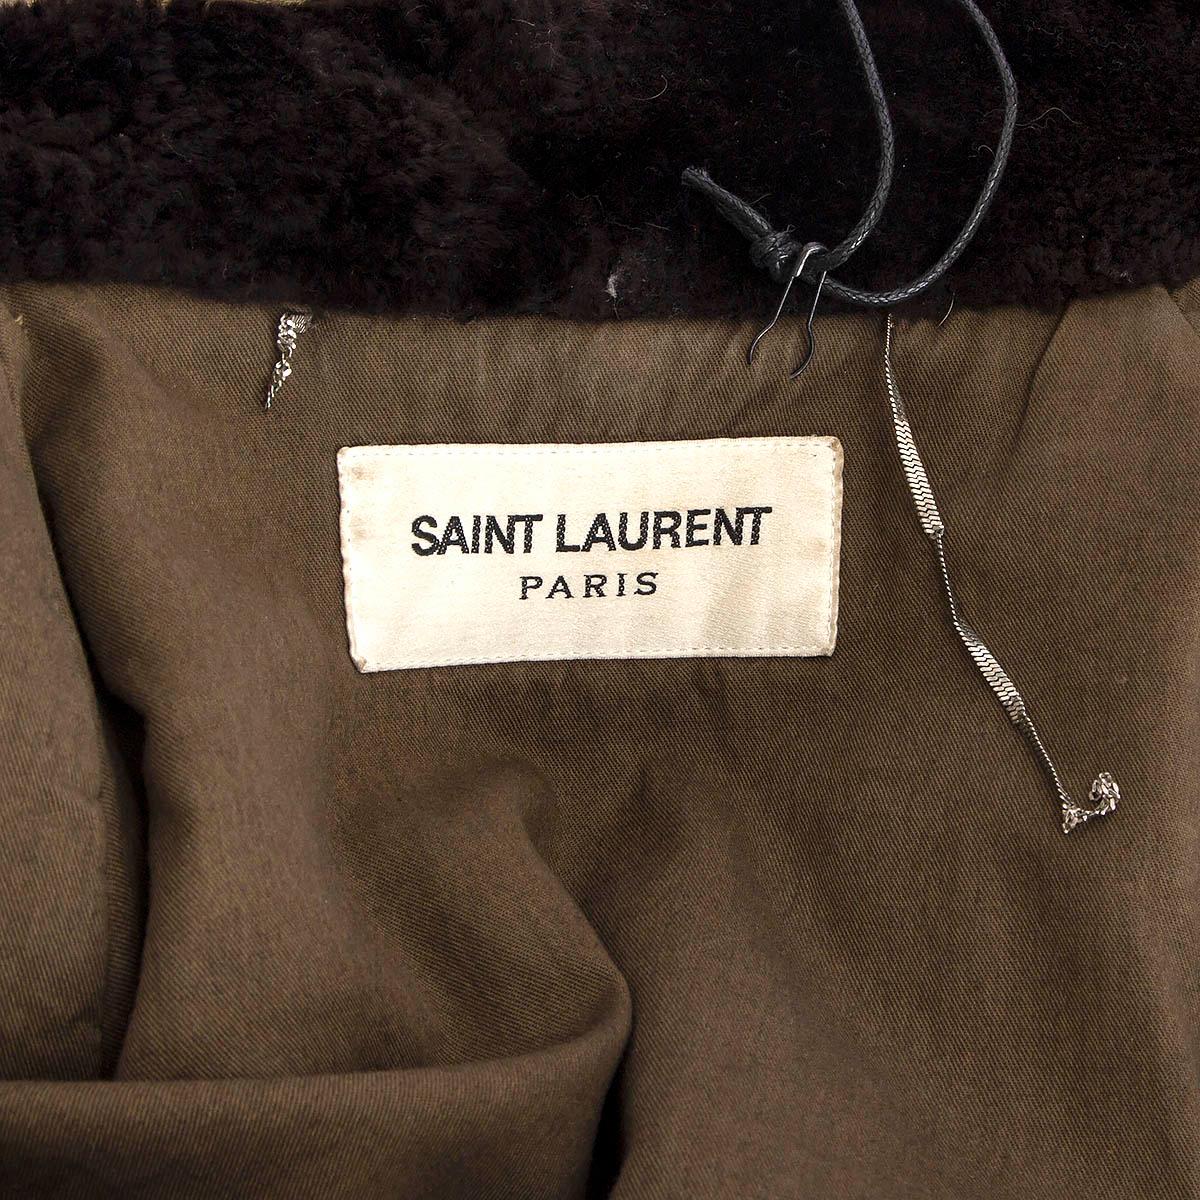 SAINT LAURENT olive green cotton FUR TRIM HOODED PARKA Coat Jacket L In Excellent Condition For Sale In Zürich, CH